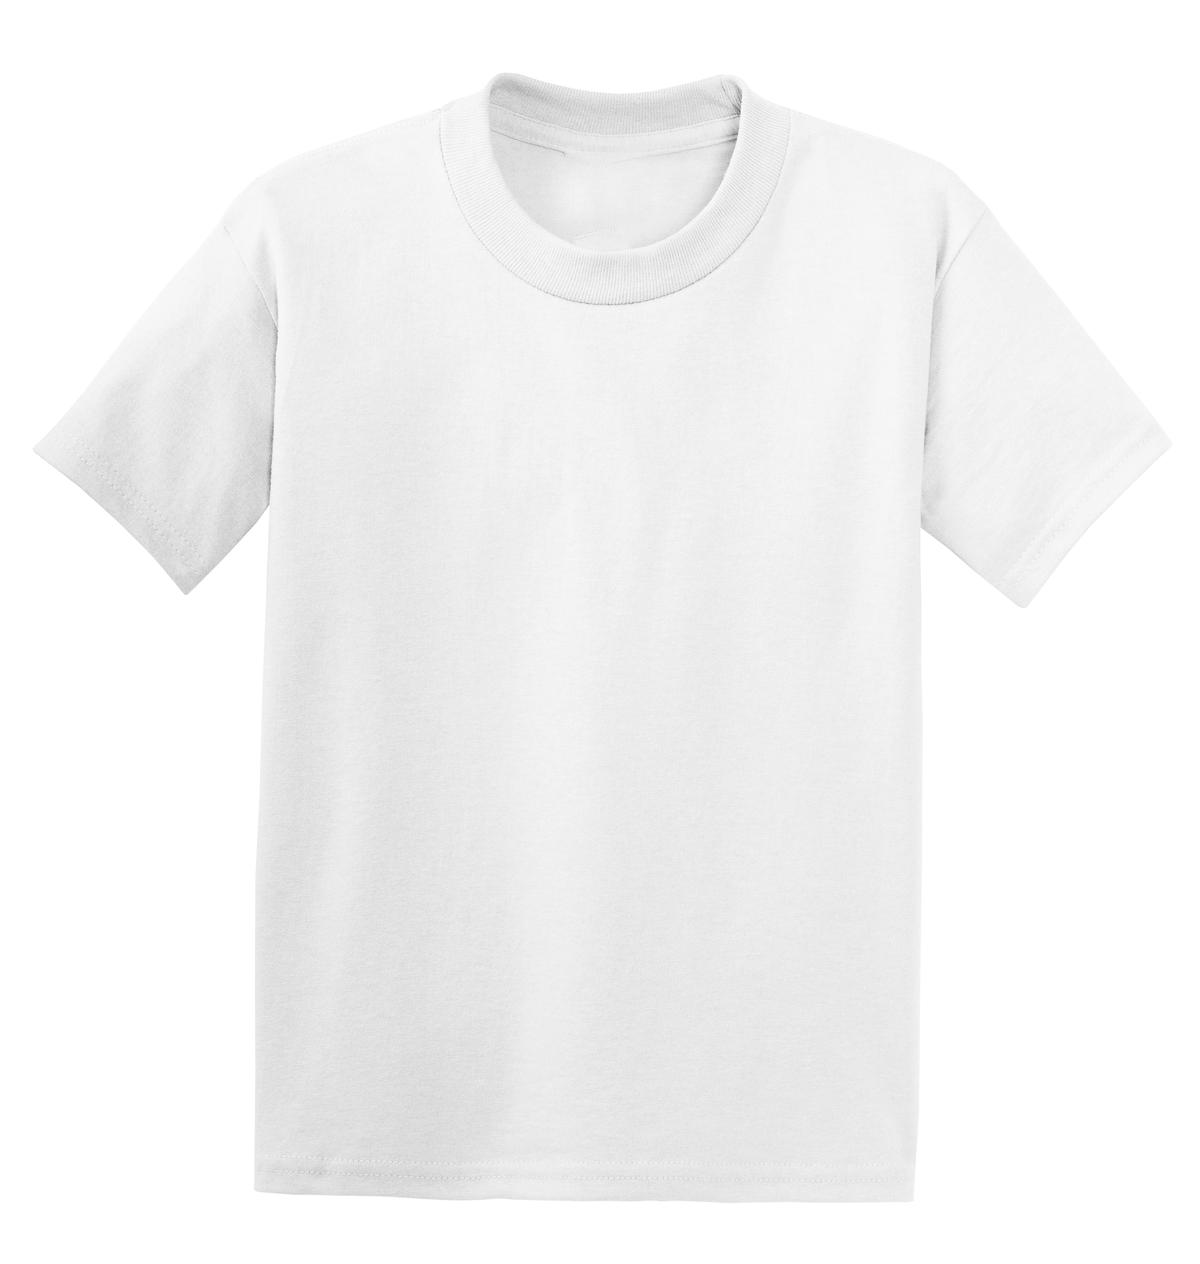 Hanes® - Youth EcoSmart® 50/50 Cotton/Poly T-Shirt. 5370 - DFW Impression